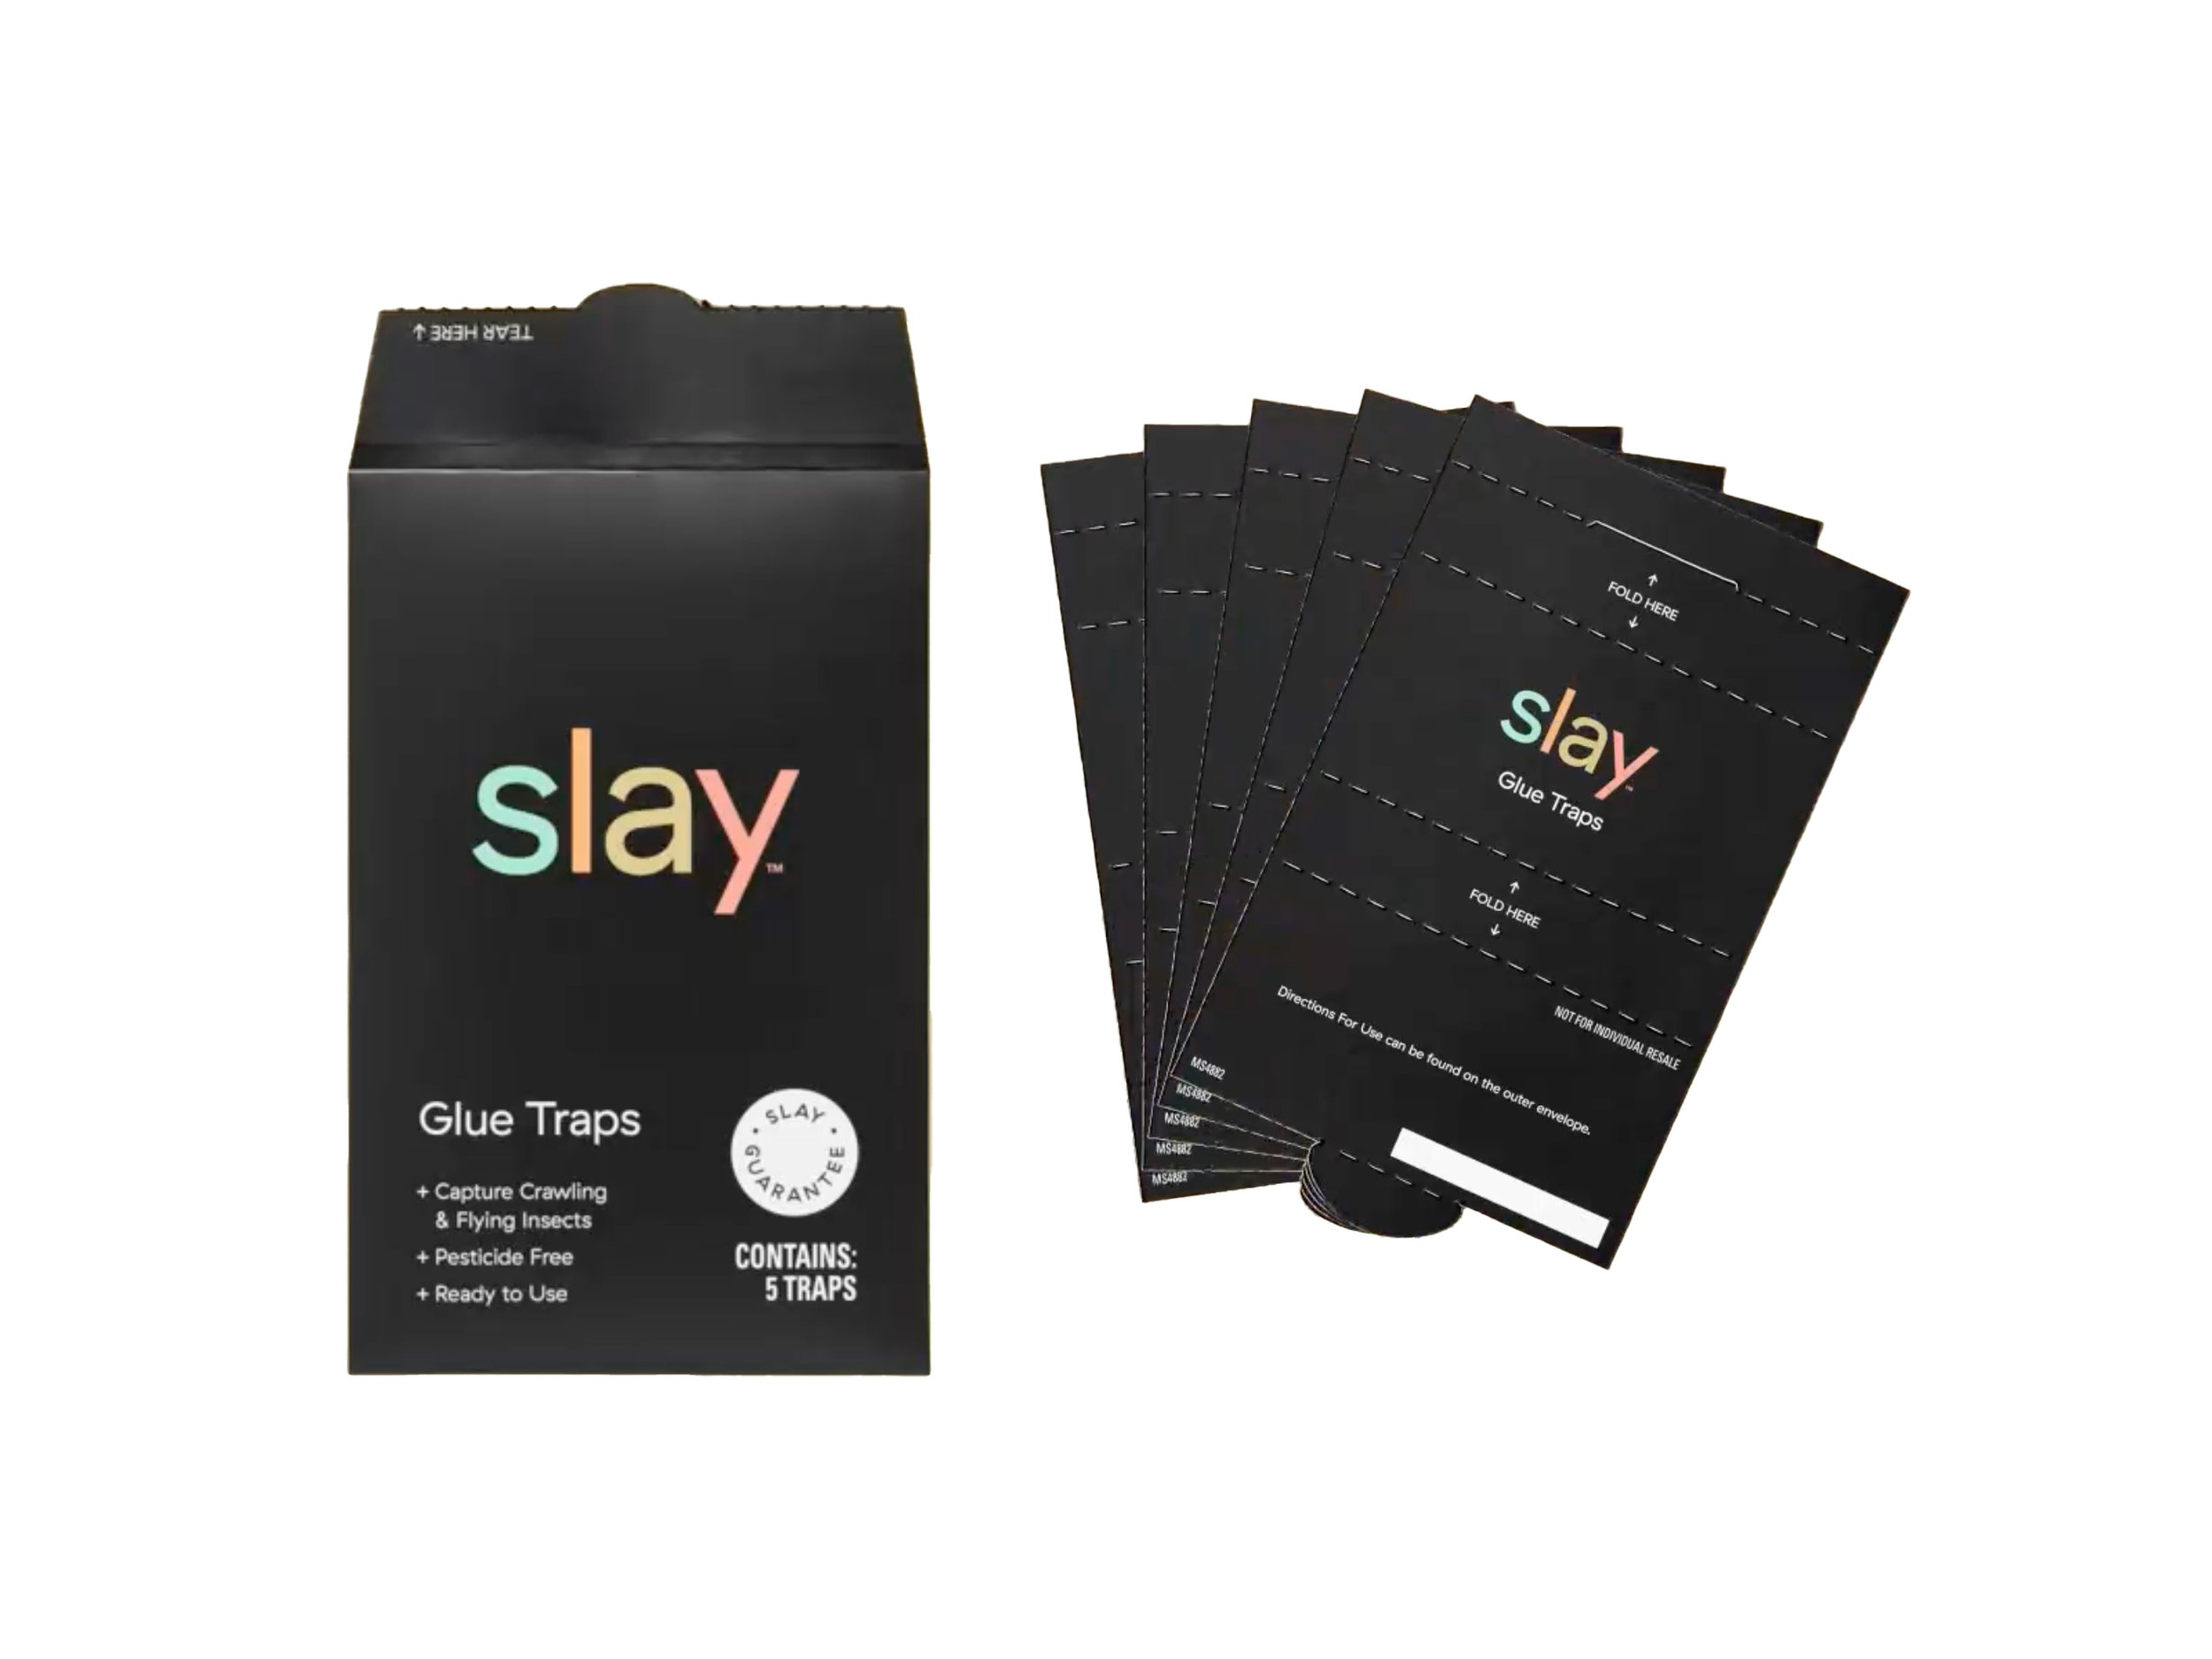 slay-glue-traps.jpg